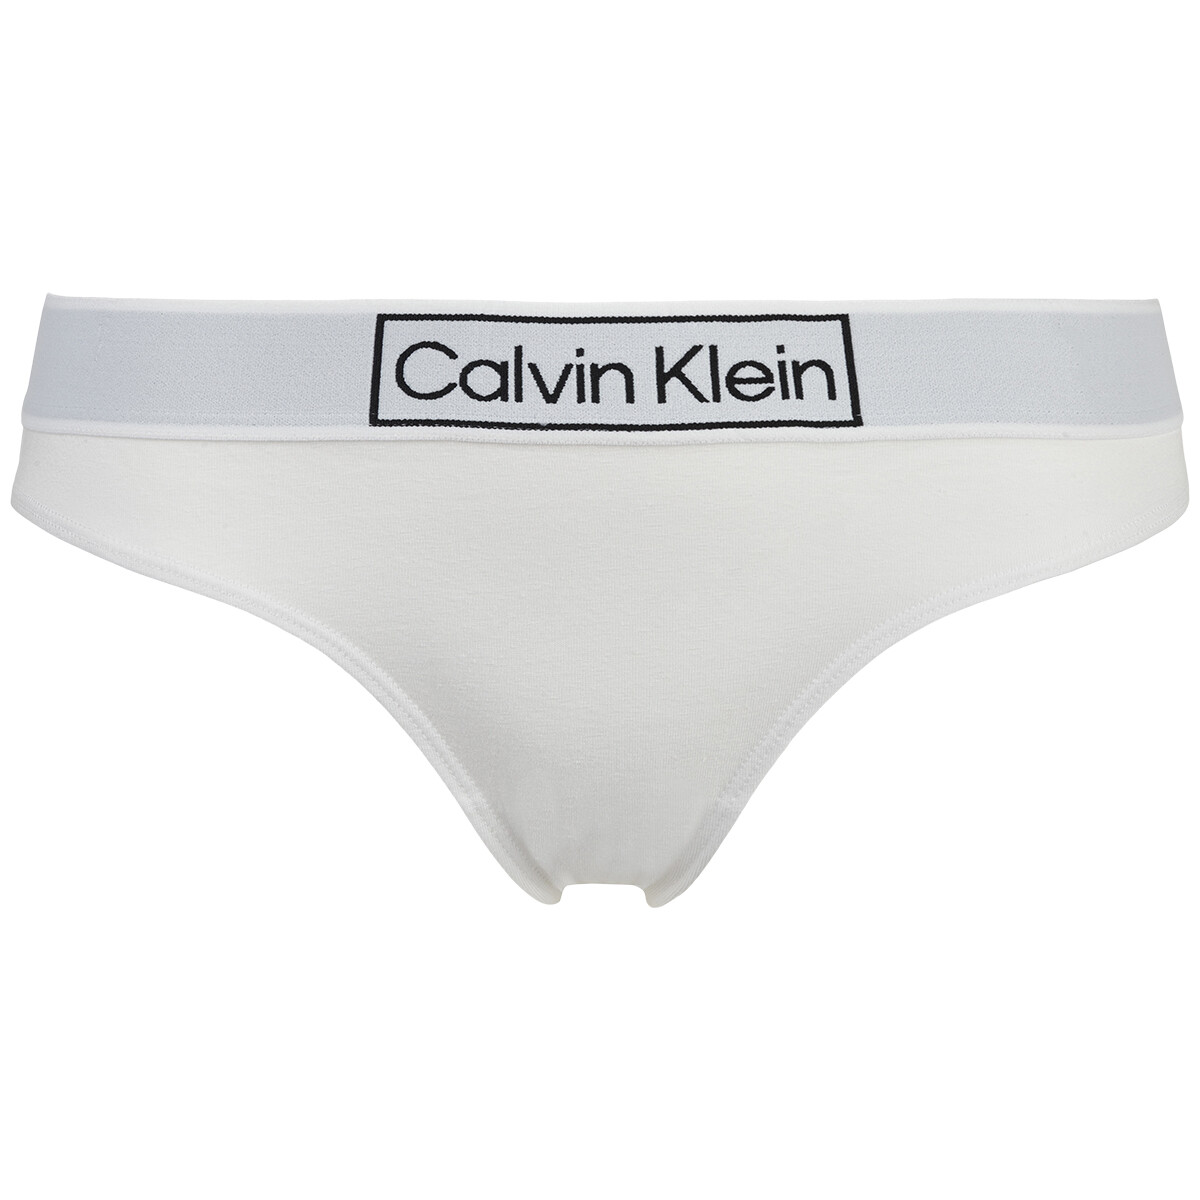 Calvin Klein Lingeri Tai Trusse, Farve: Hvid, Størrelse: L, Dame